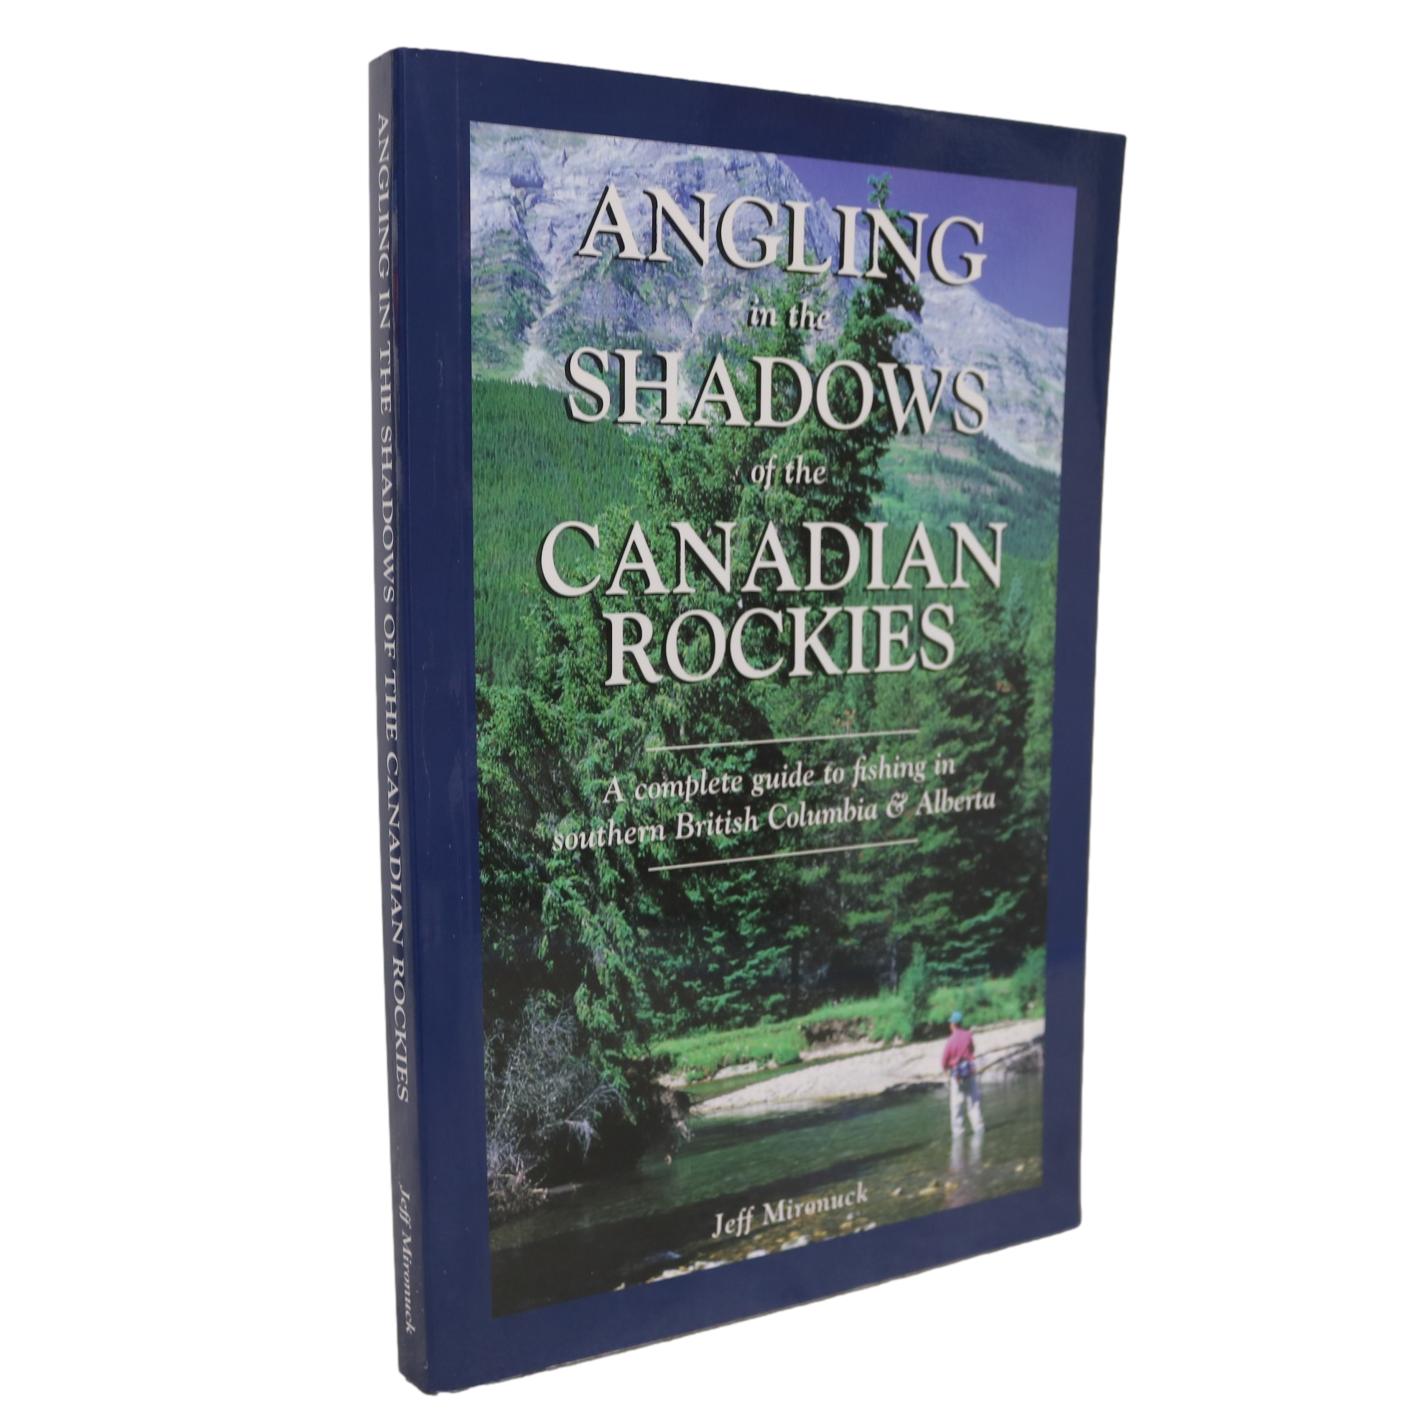 Angling Canadian Rockies BC Alberta Canada Fly Fishing Guide Fish Used Book